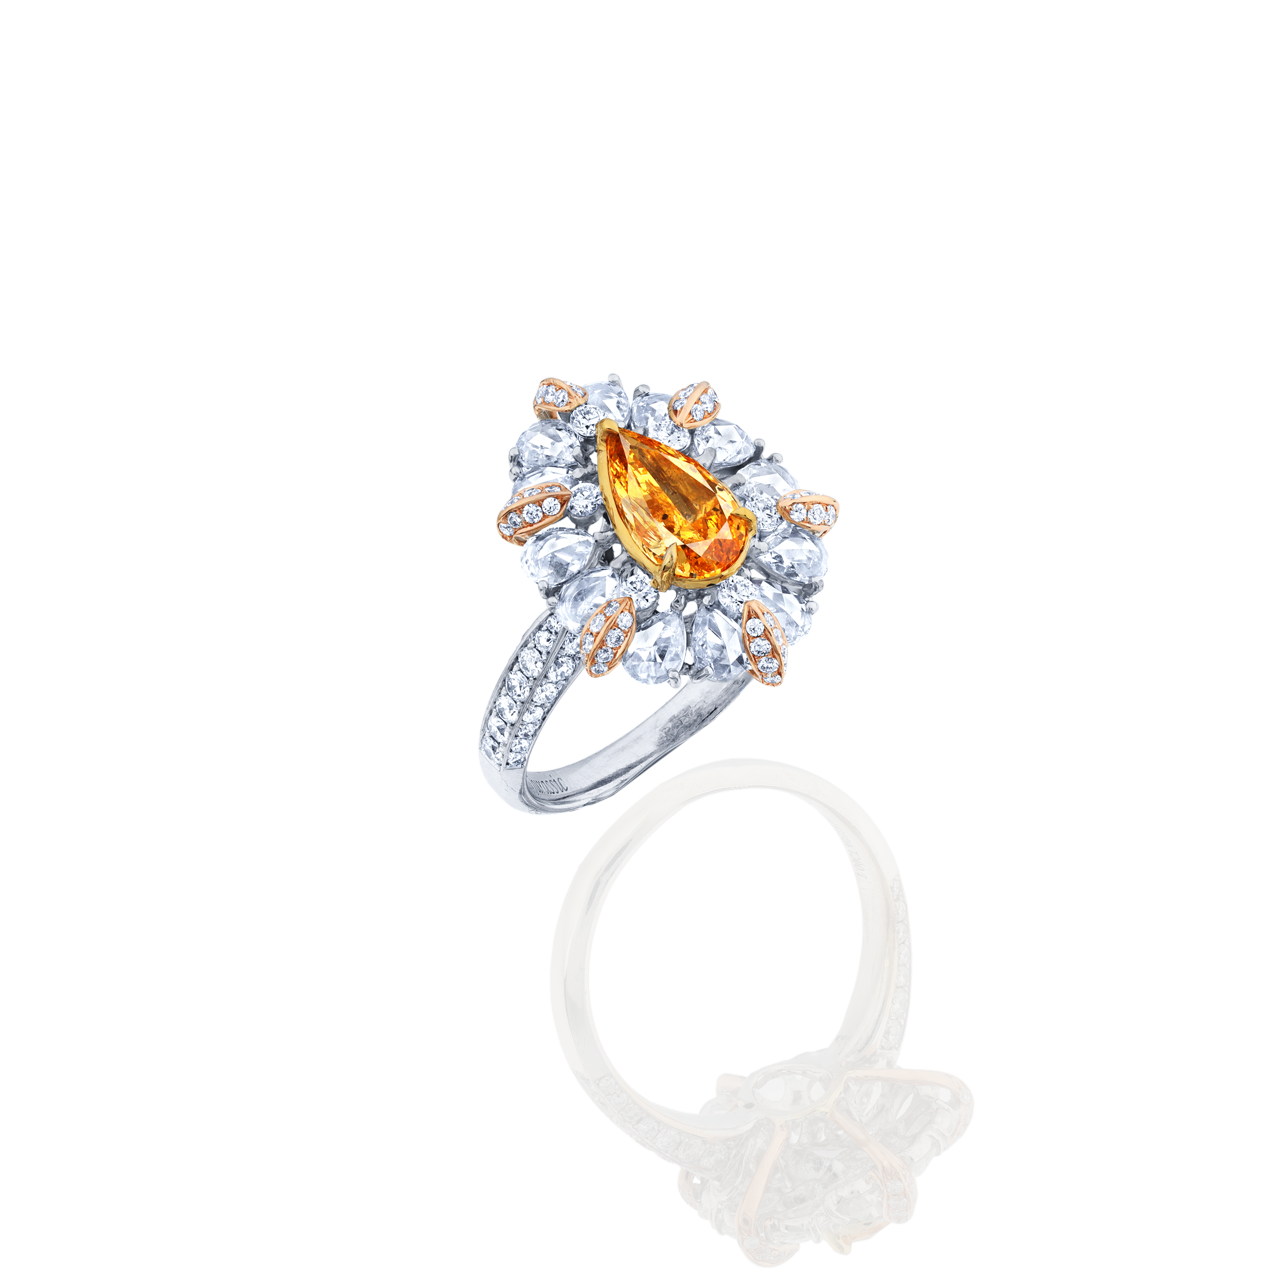 GIA 1.00克拉 艷彩黃橘鑽戒
Fancy Vivid Yellow -Orange Colored 
Diamond Ring